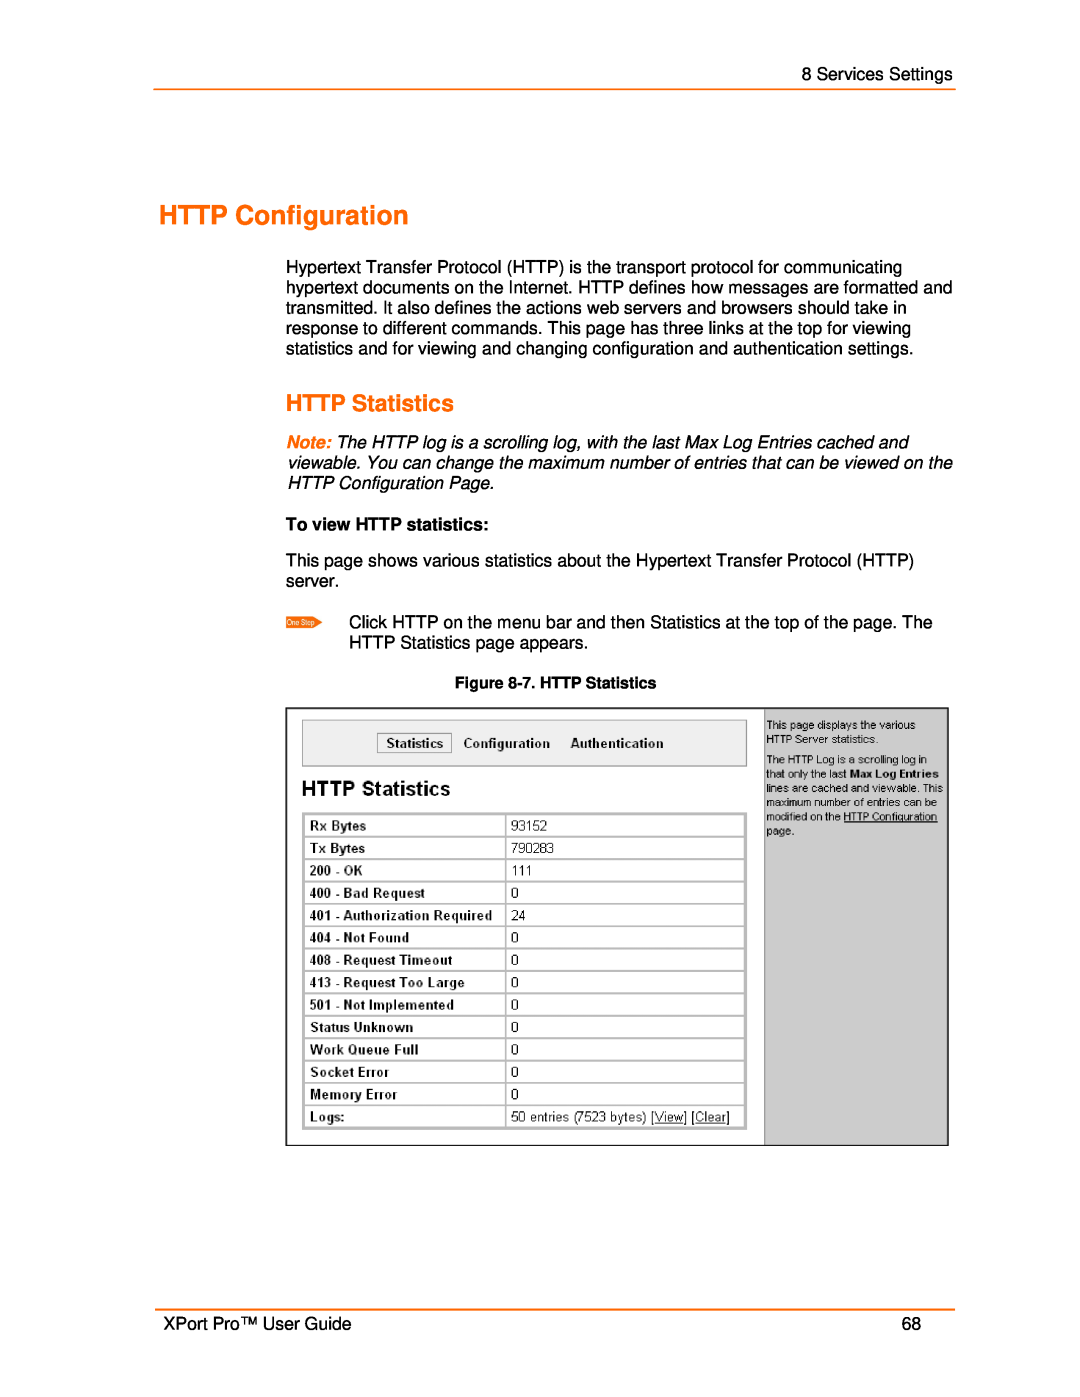 Lantronix 900-560 manual HTTP Configuration, HTTP Statistics 